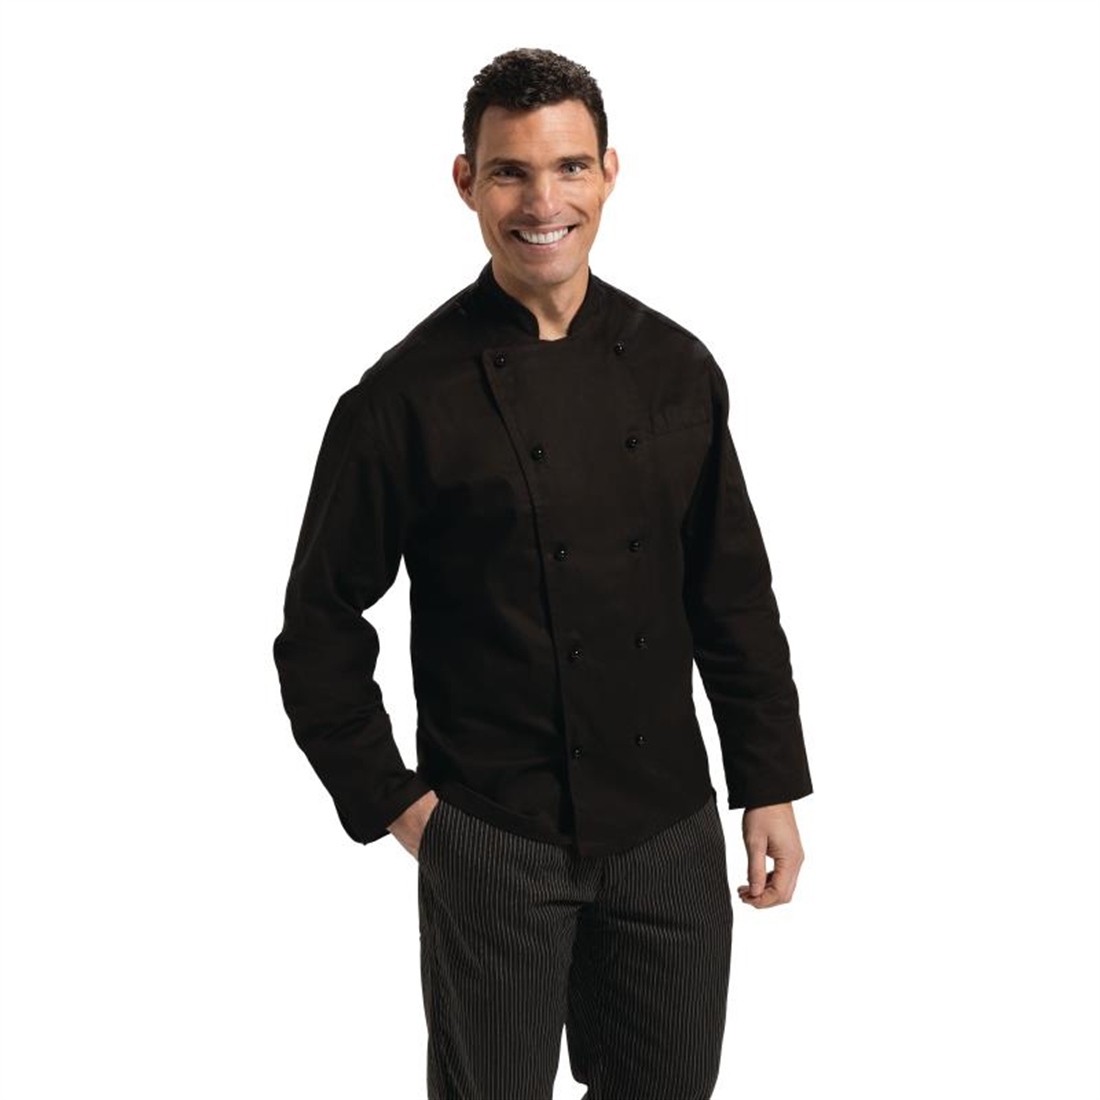 Whites Vegas Chef Jacket Short Sleeve Black - XXL